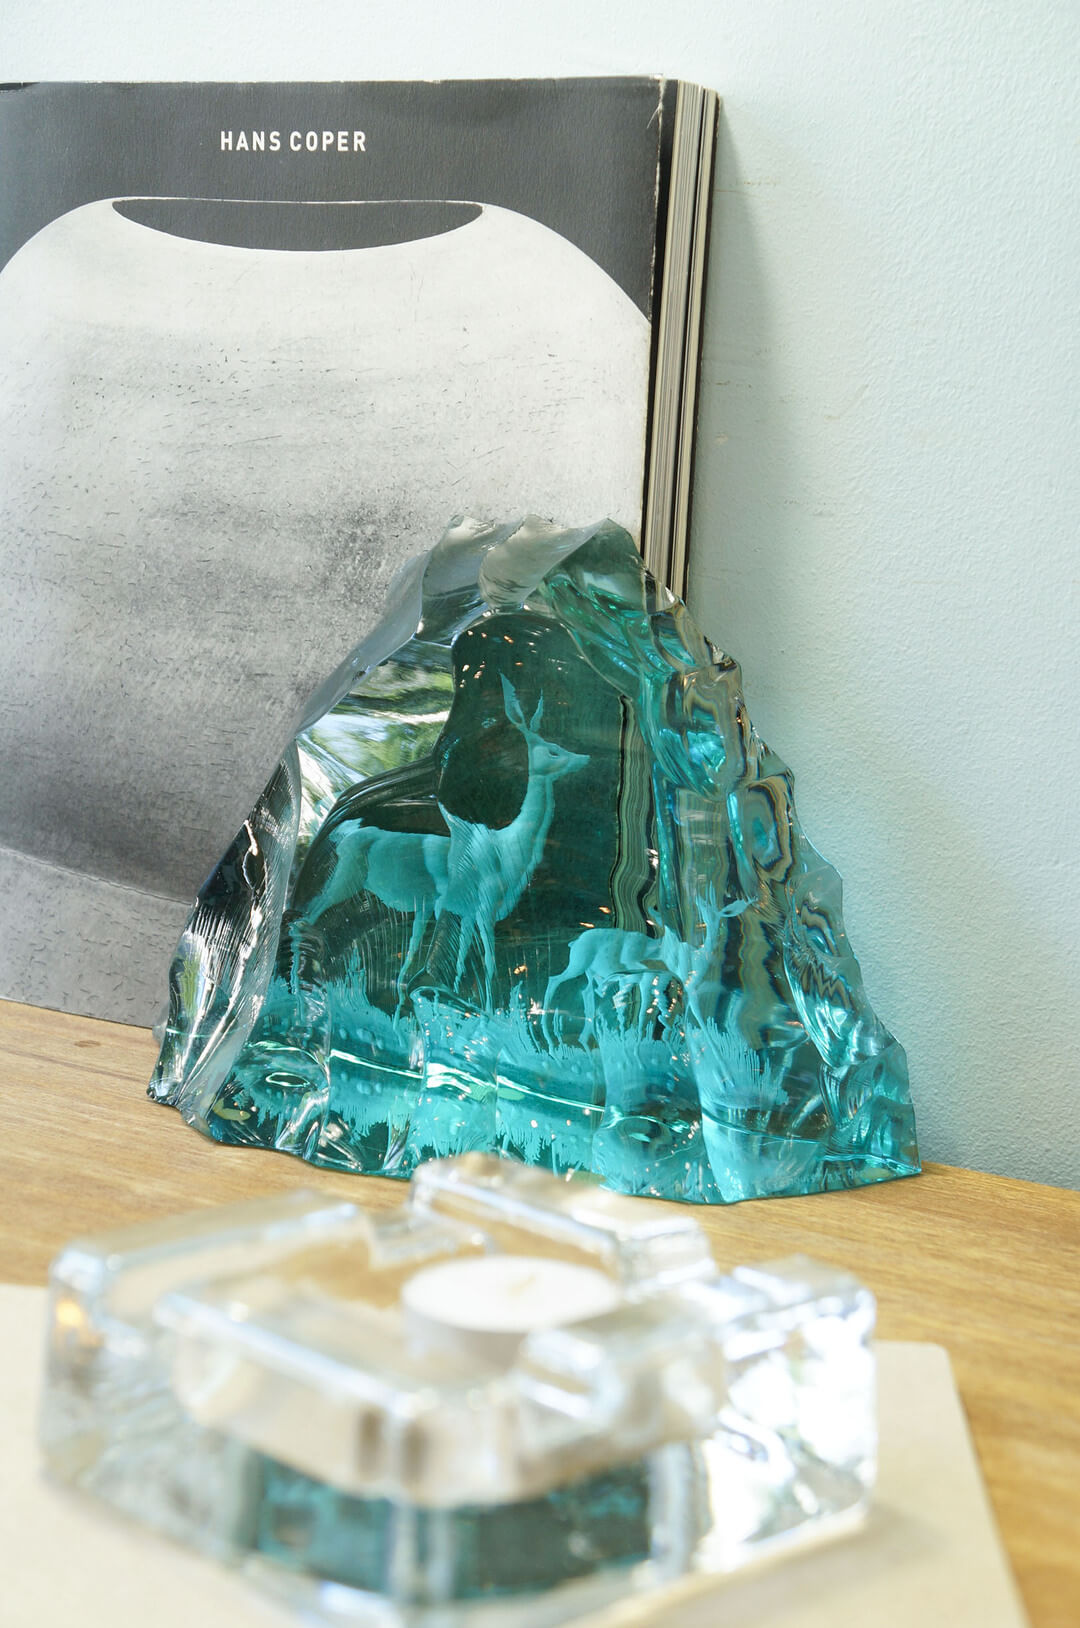 Kosta Glass Sculpture "Icebergs" Vicke Lindstrand/コスタ アイスバーク ガラス彫刻 ヴィッケ・リンドストランド スウェーデン 北欧雑貨 インテリア